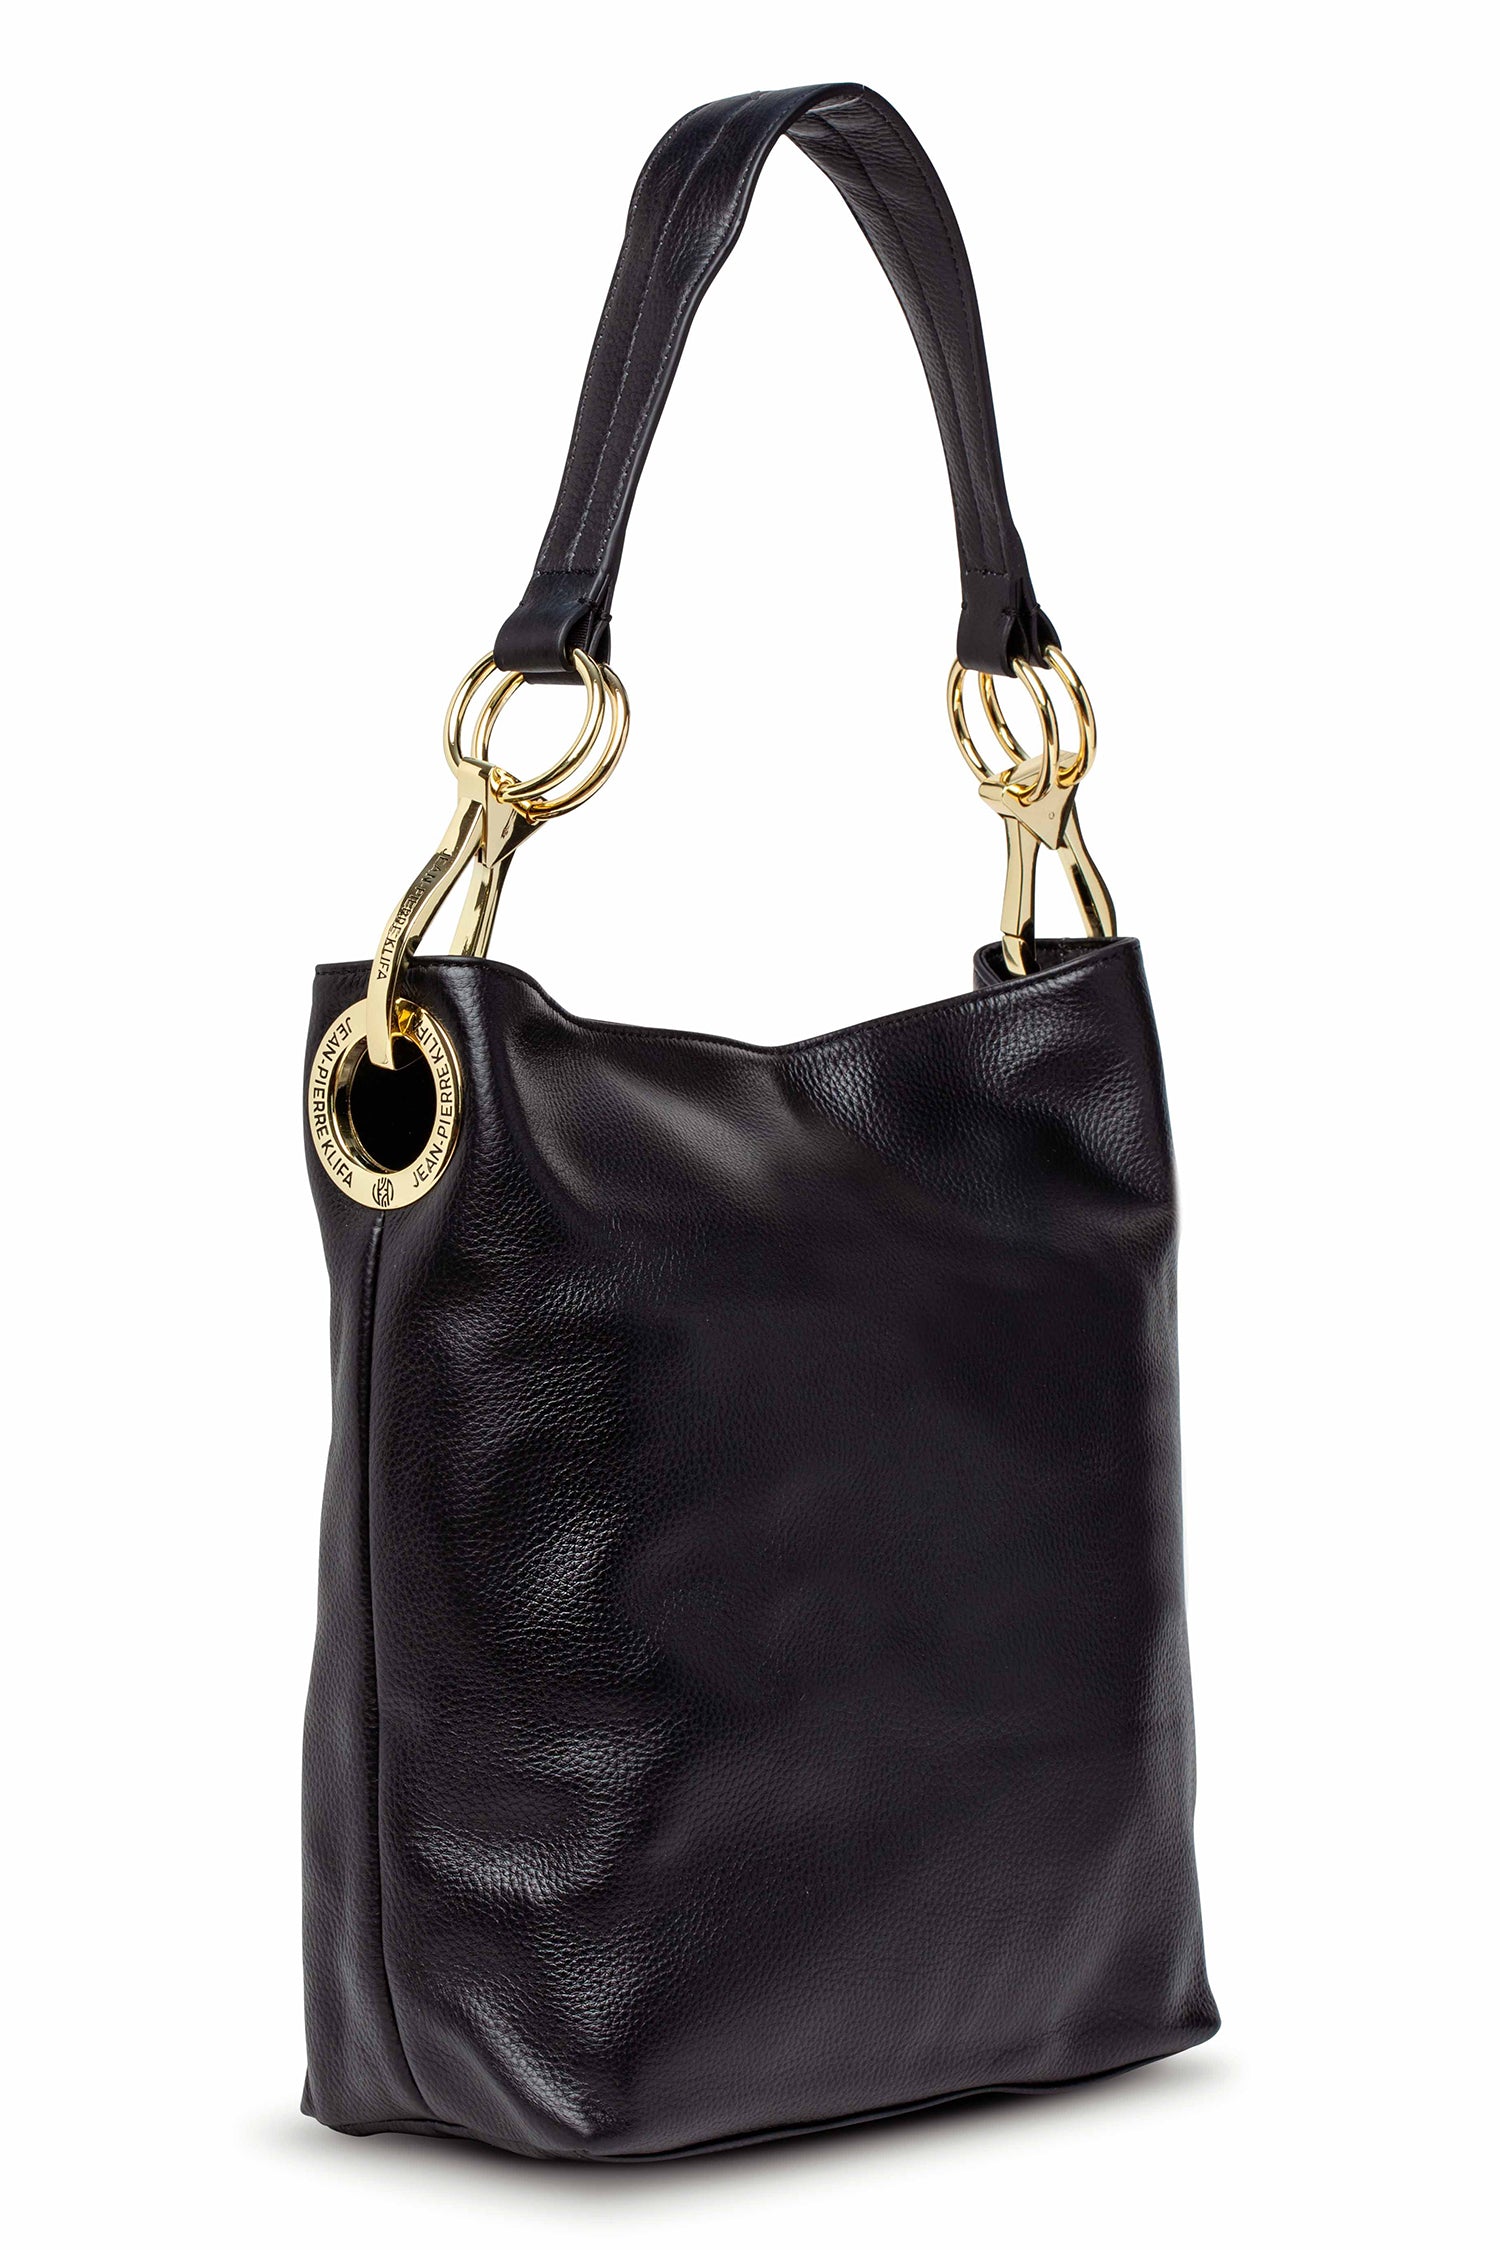 Leather Bucket Bag Black Handbag Jean-Pierre Klifa   